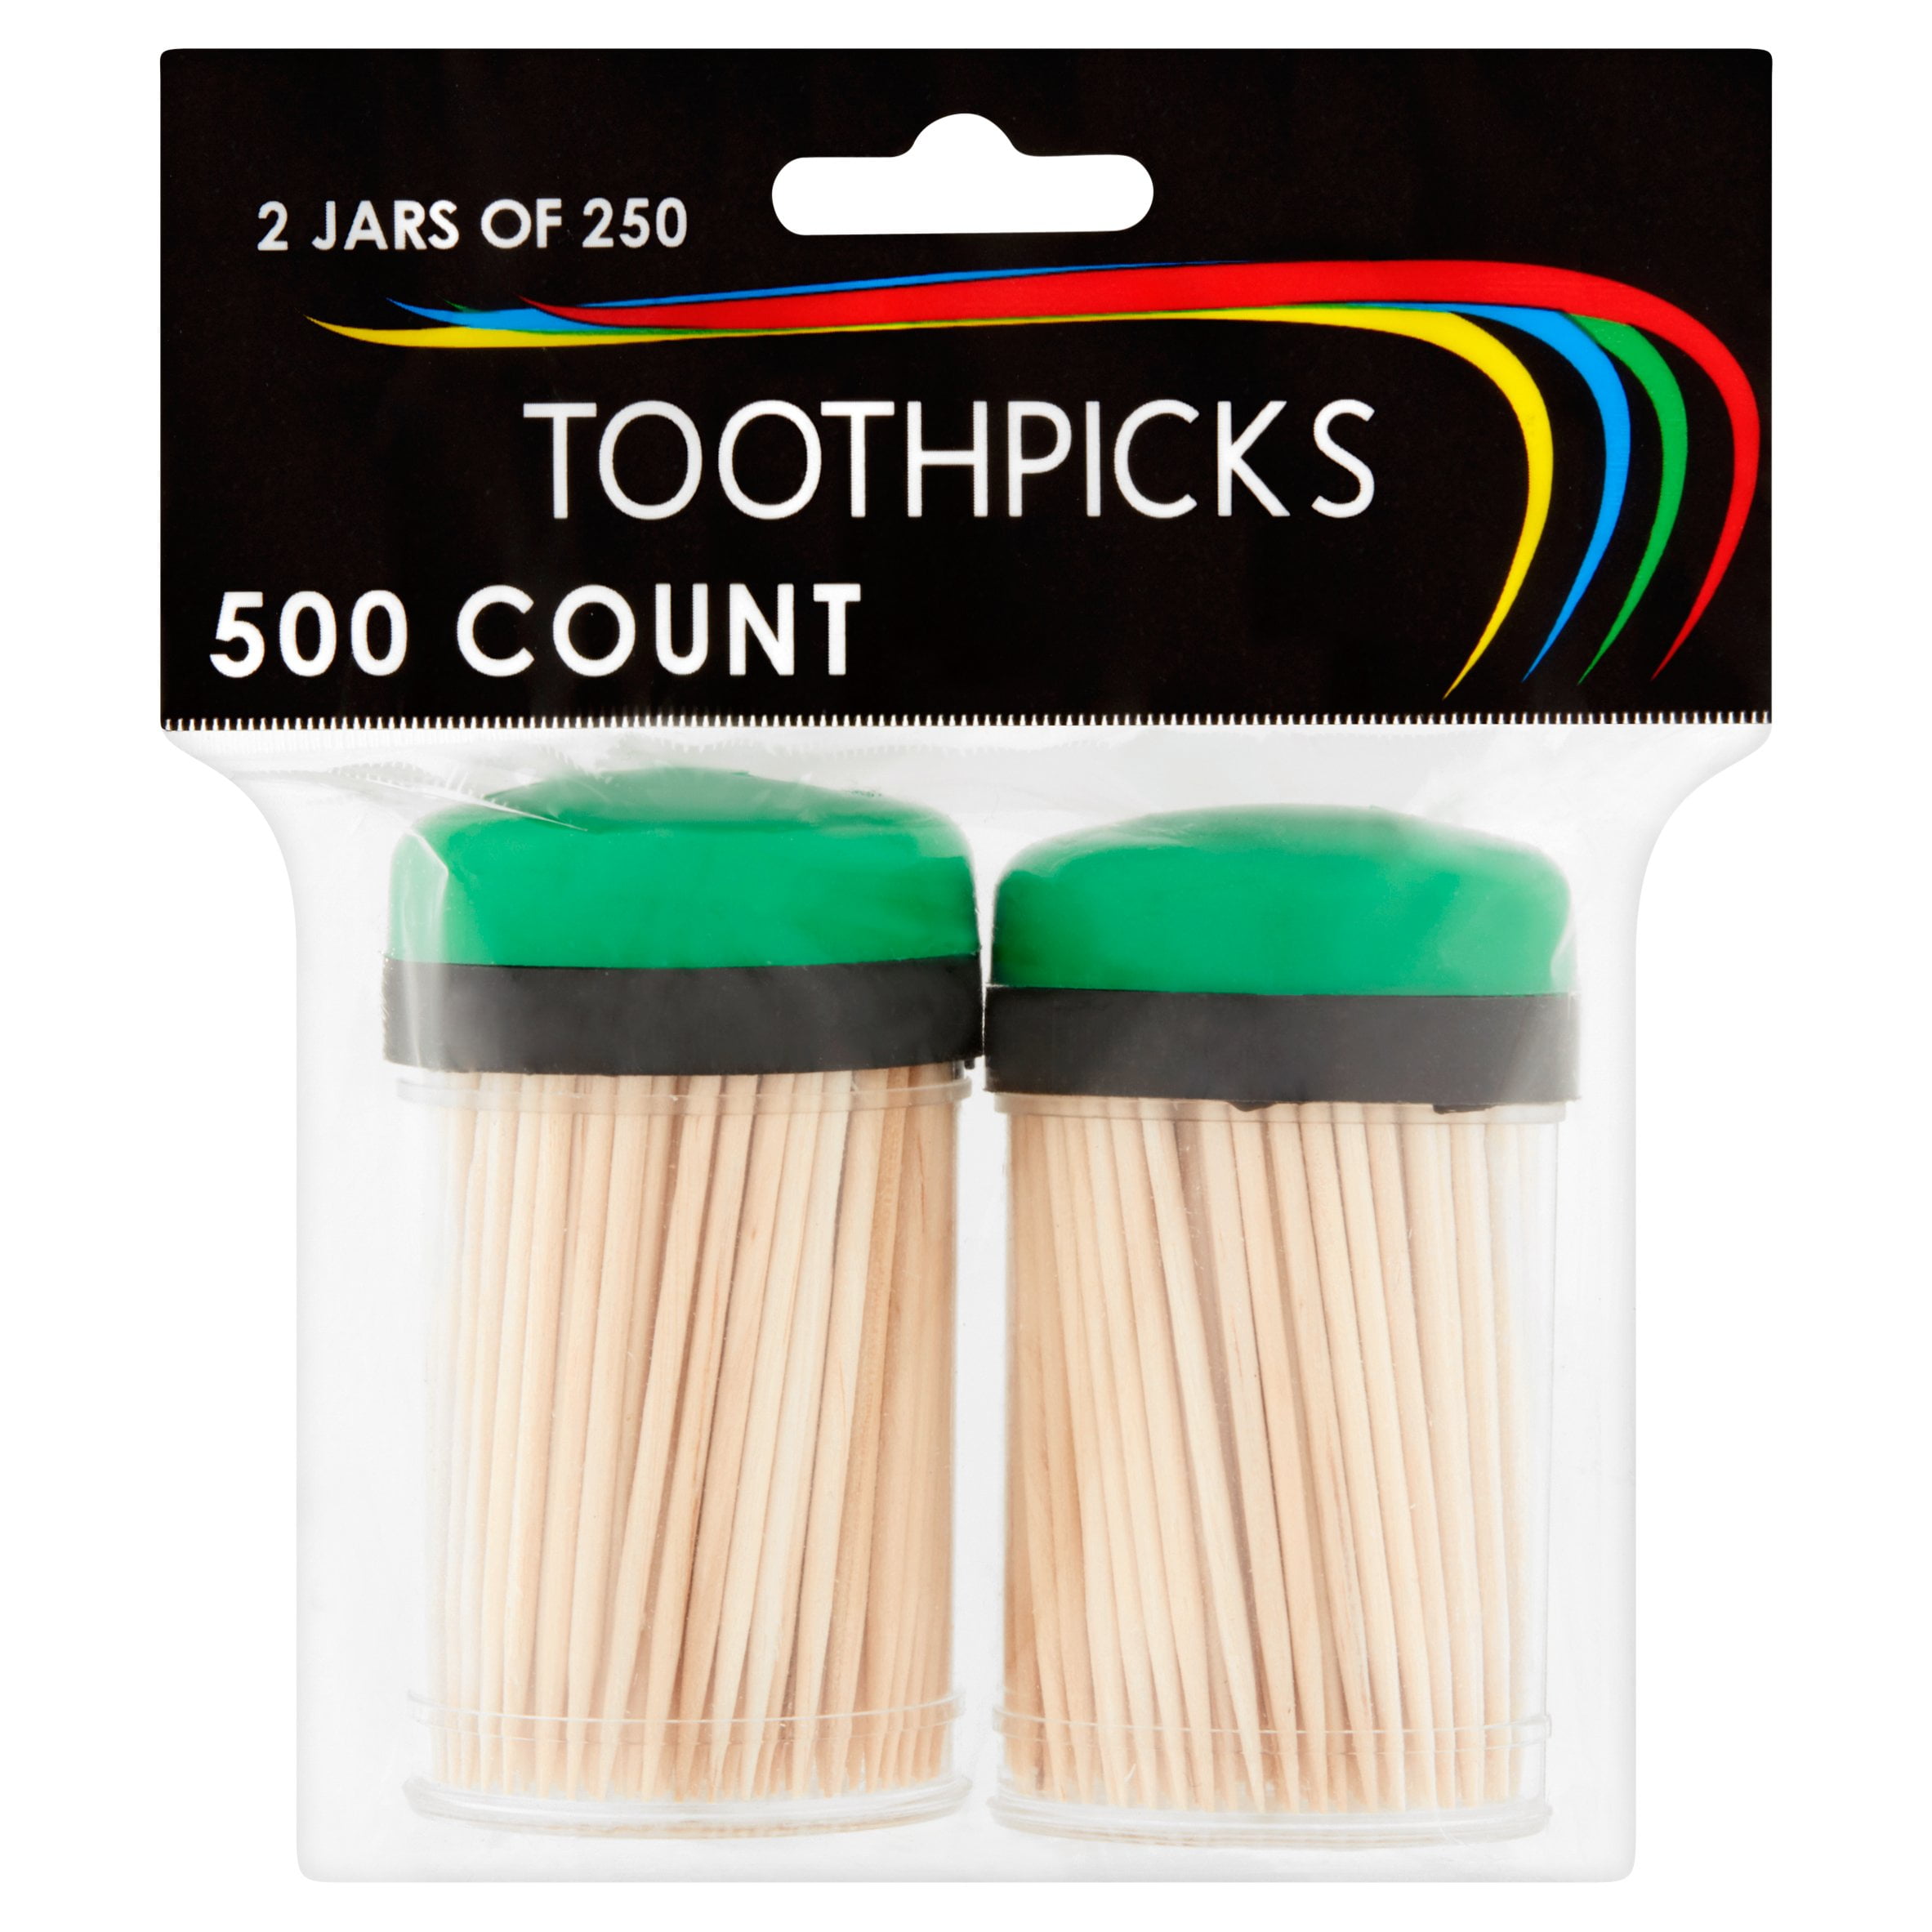 Toothpicks, 500 Count